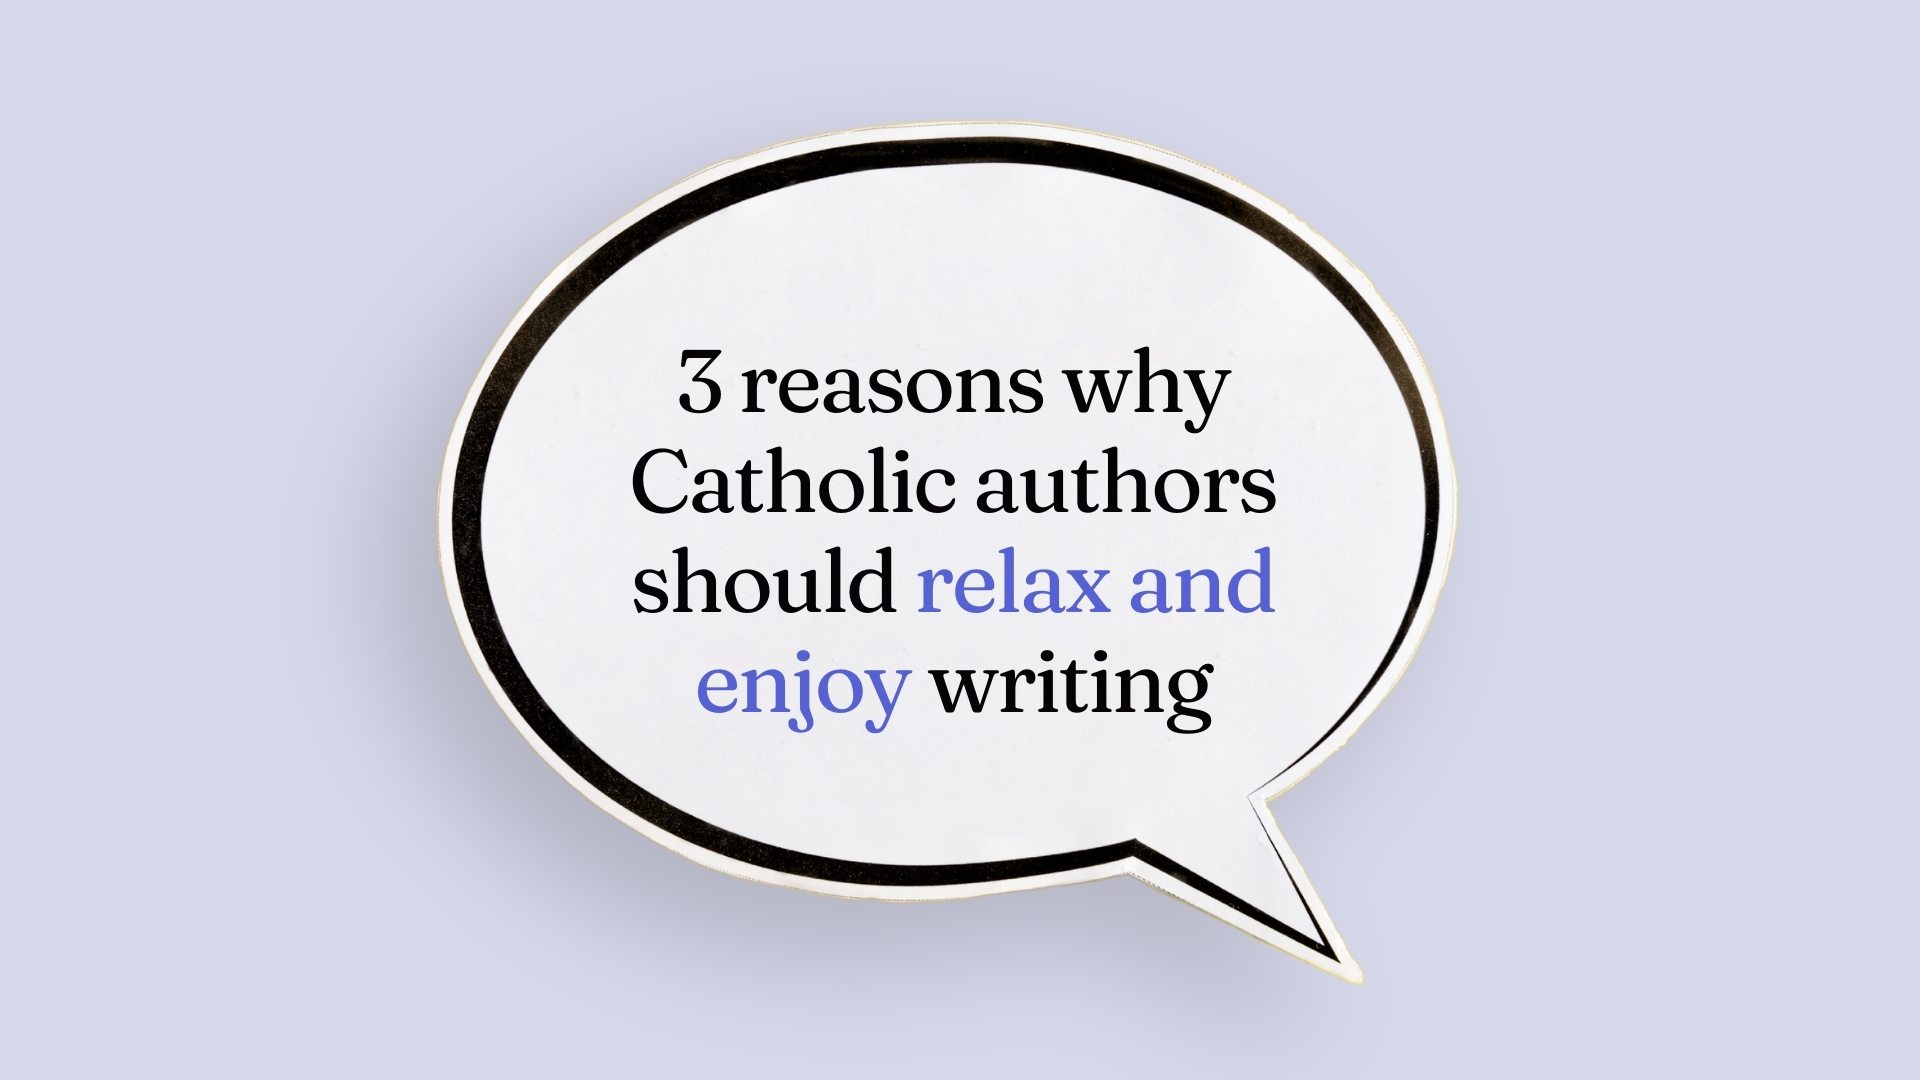 3 reasons why Catholic authors should relax and enjoy writing